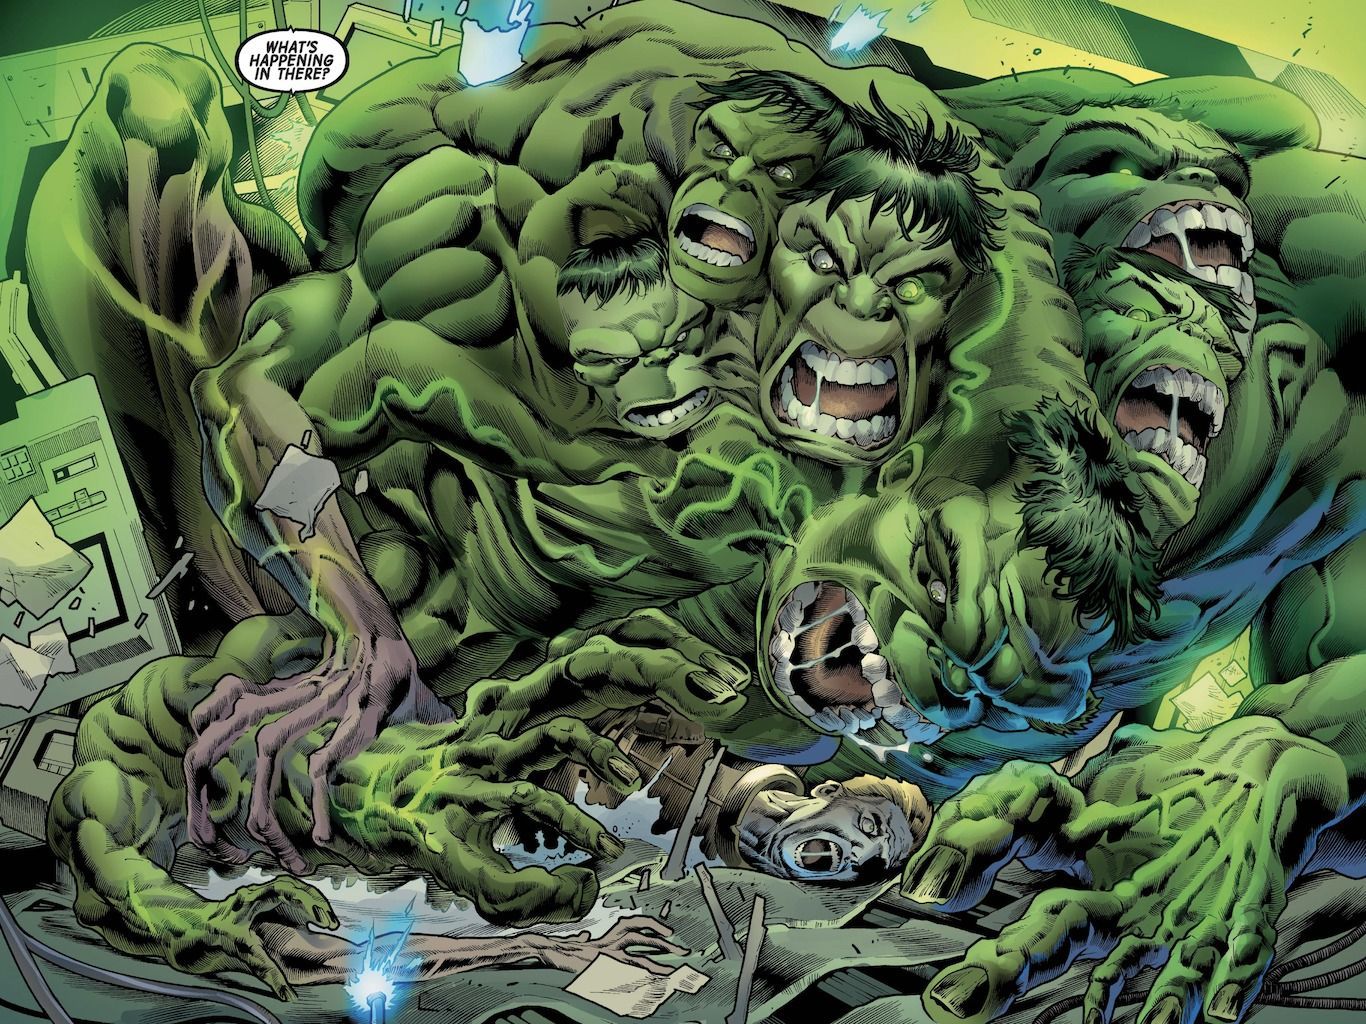 hulk-devil-hulk-enters-the-scene-in-the-latest-installment-in-the-immortal-series.jpg